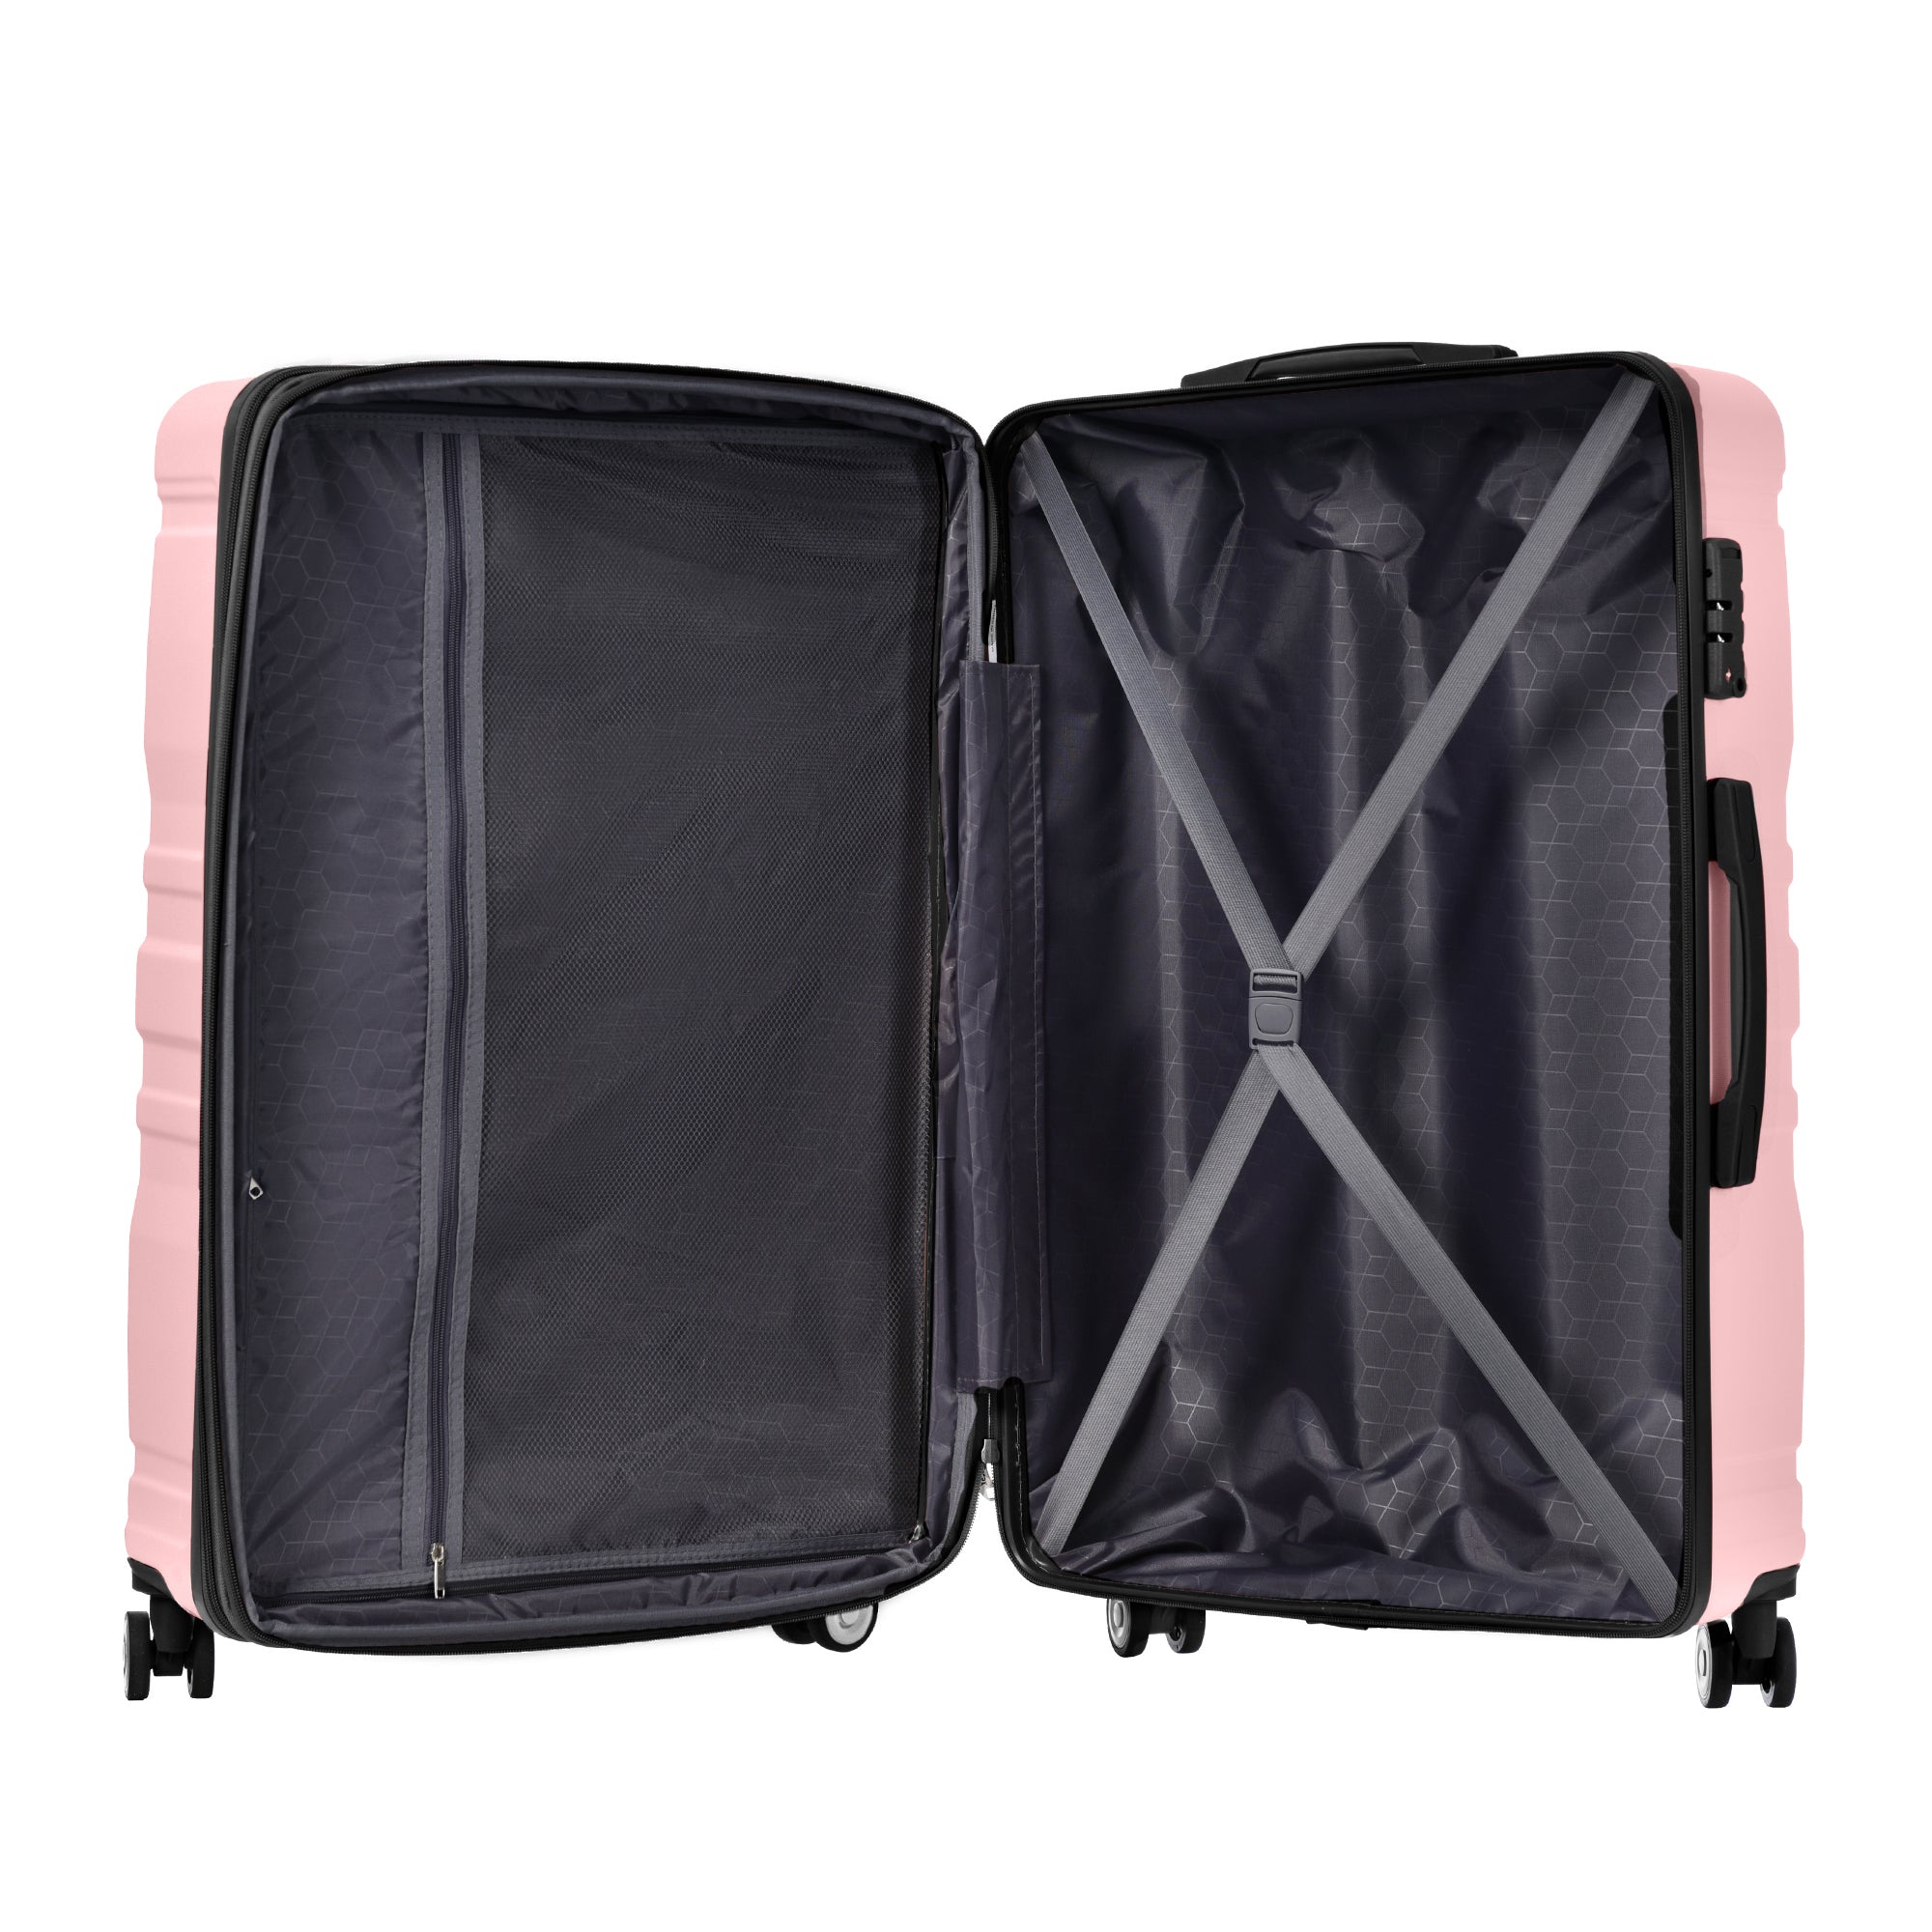 Luggage Sets Model Expandable ABS Hardshell 3pcs pink+black-abs